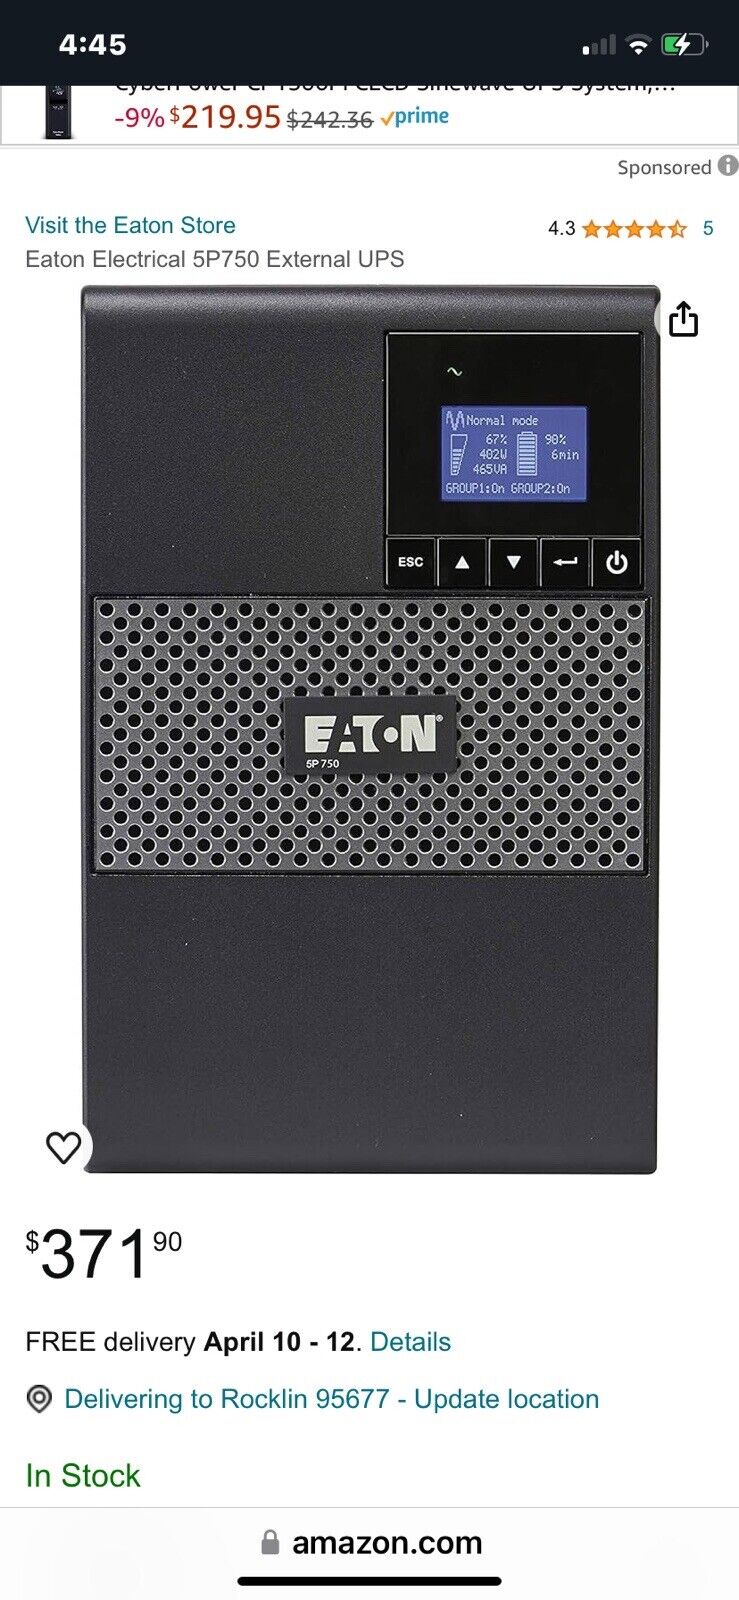 Eaton Electrical 5P750 External Universal Power Supply